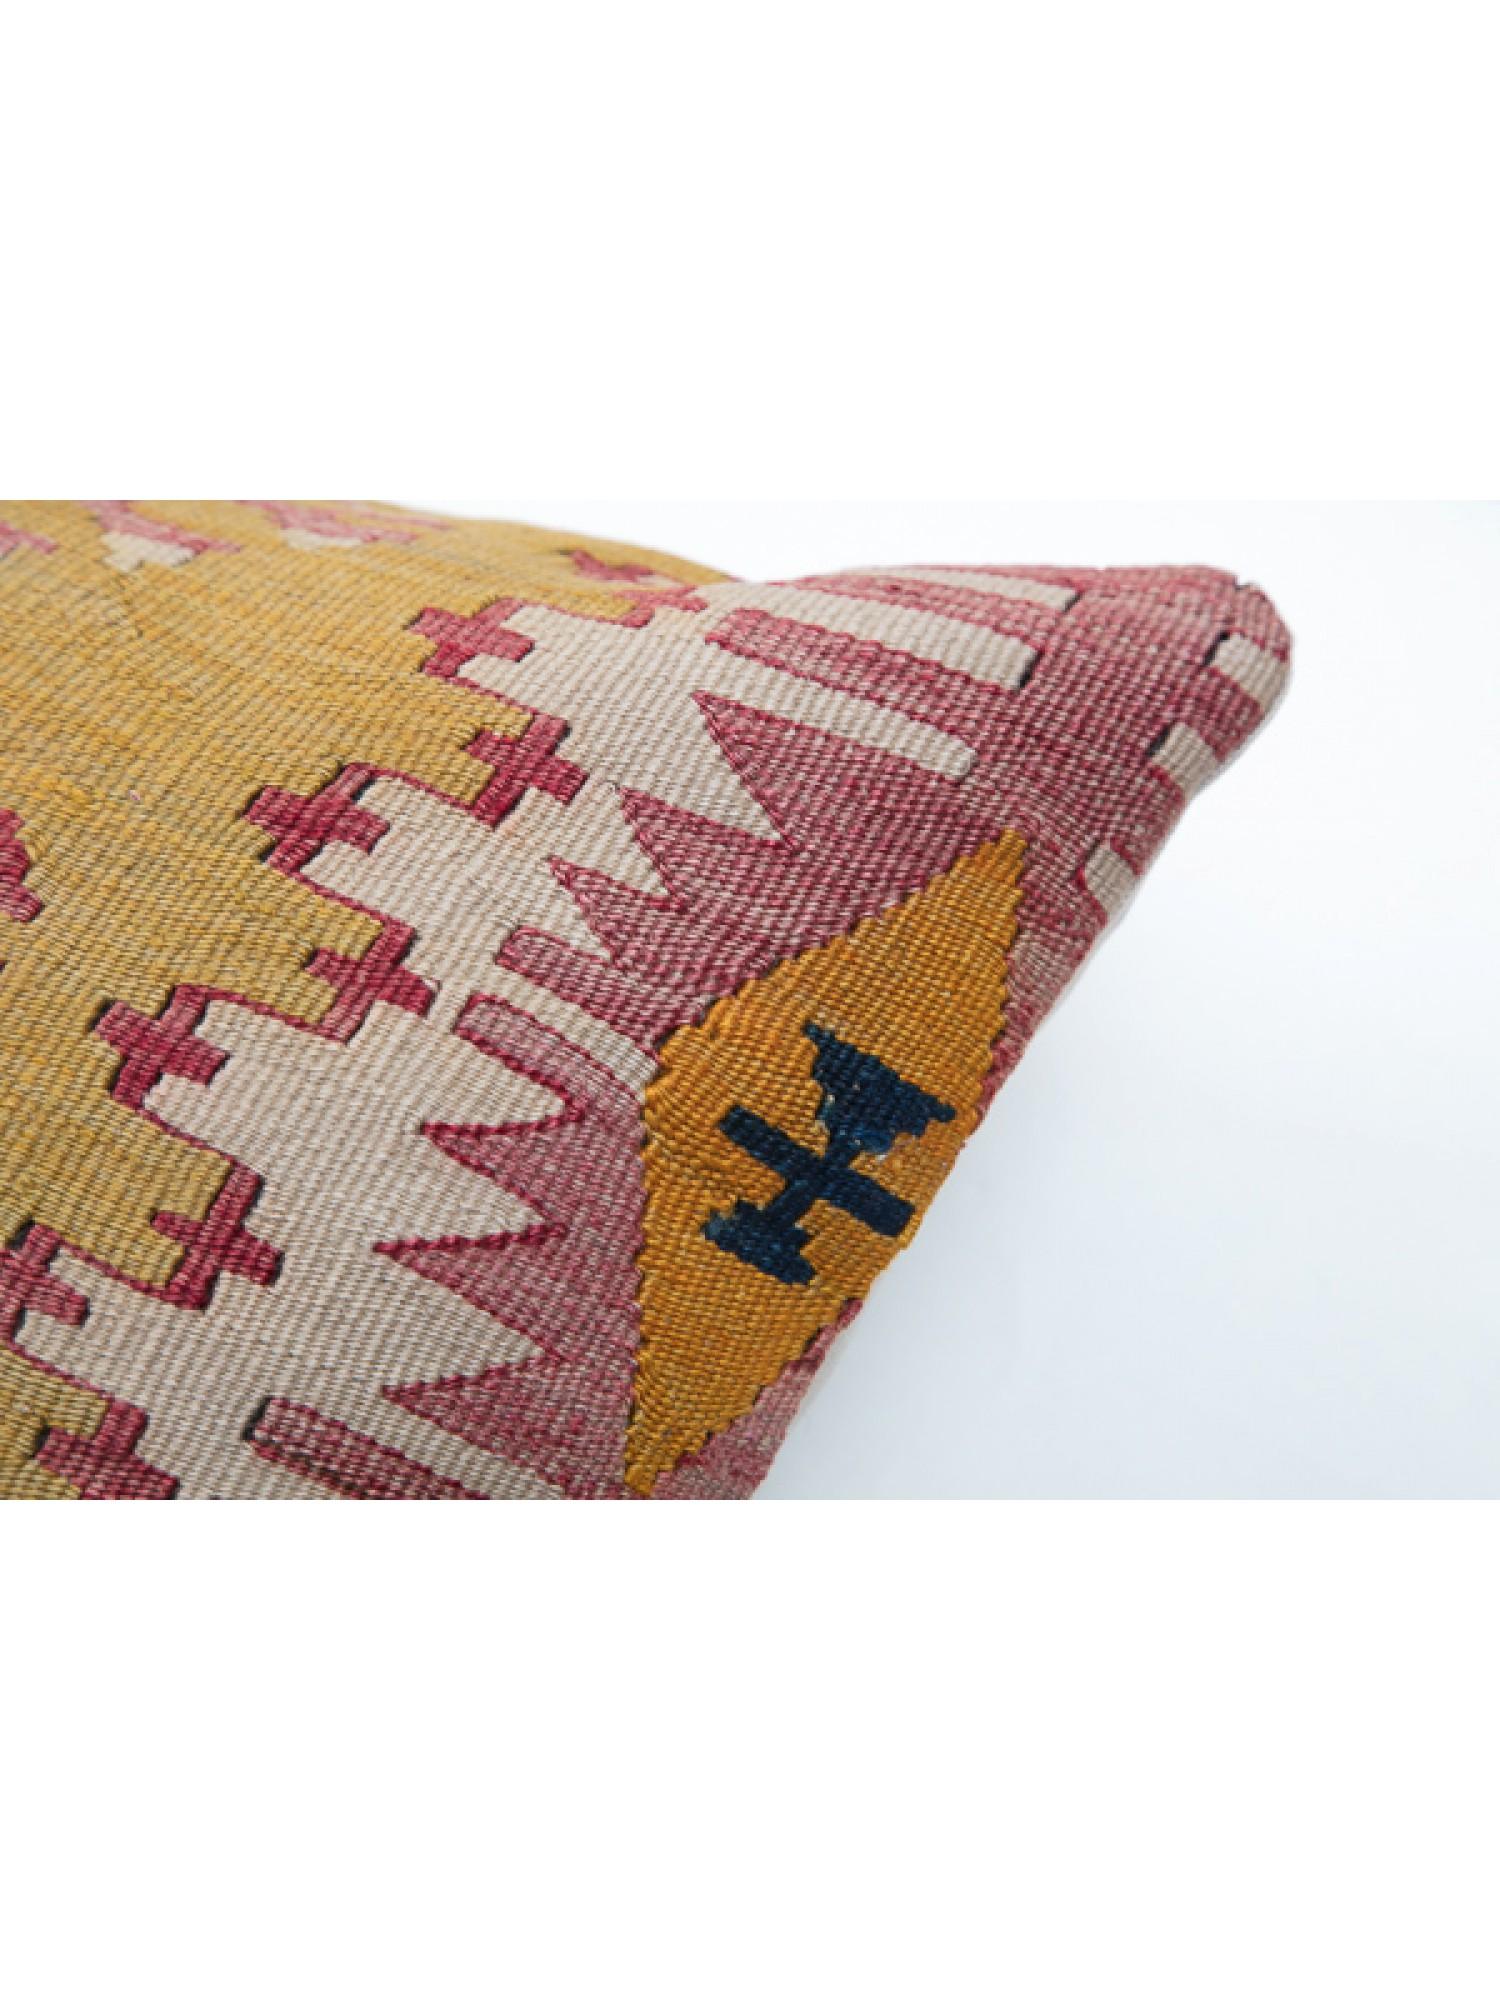 Hand-Woven Antique & Old Kilim Cushion Cover, Anatolian Yastik Turkish Modern Pillow KC3481 For Sale